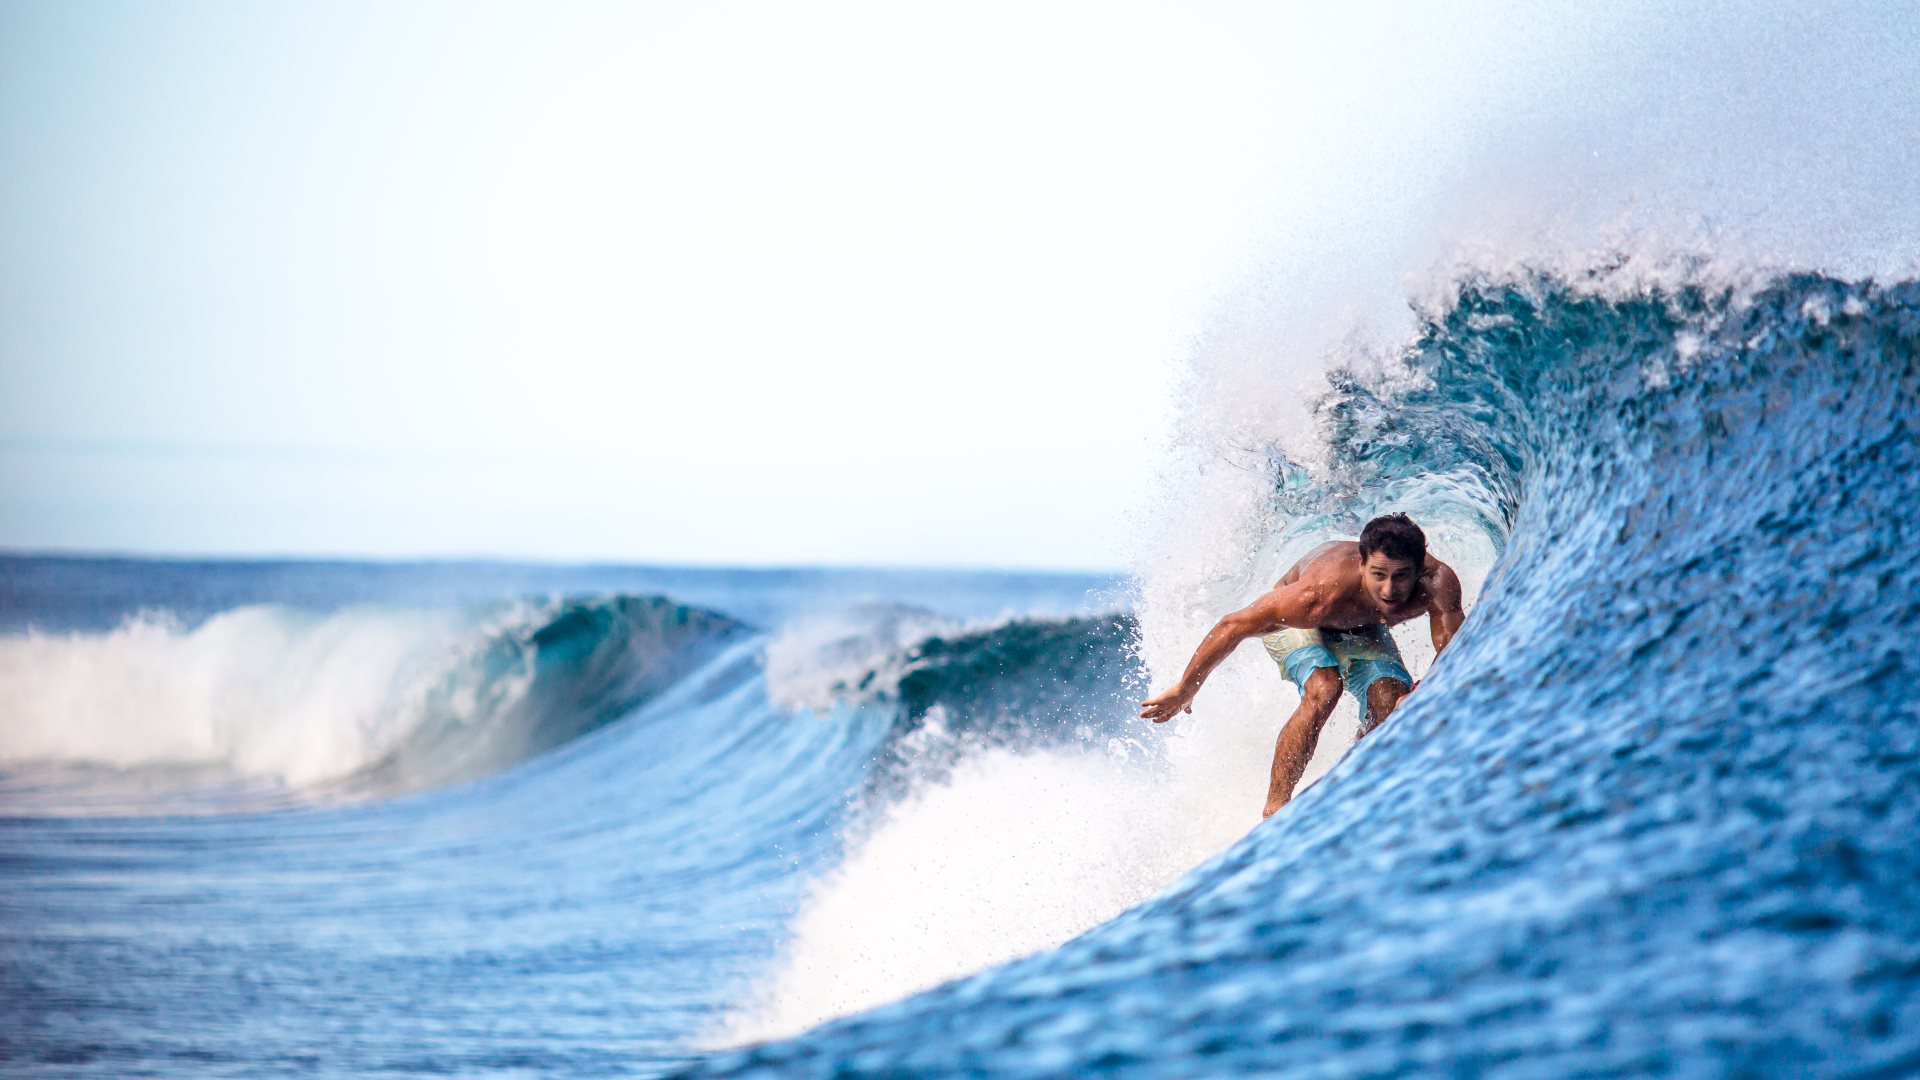 Longboard Surfing Wallpaper Surfer on wave for hd hdtv